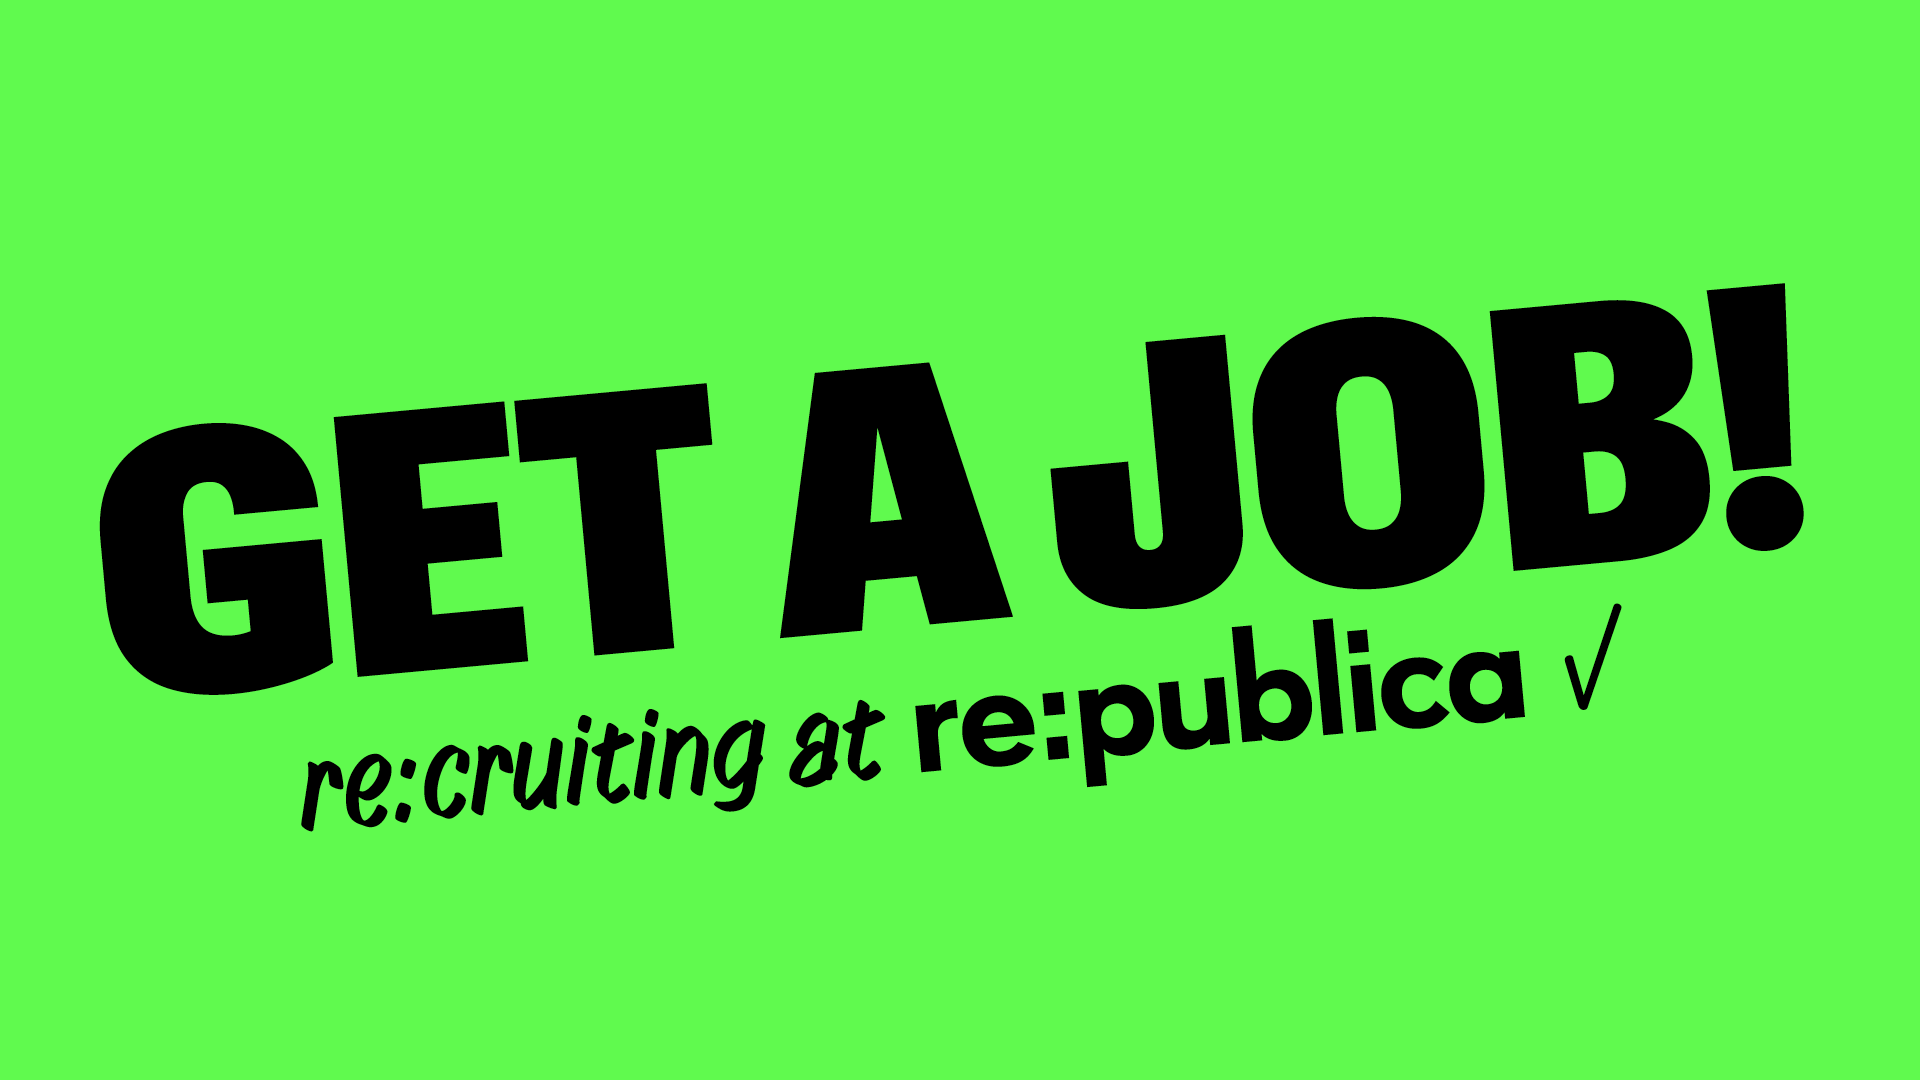 Get a Job! recruiting @ republica 22